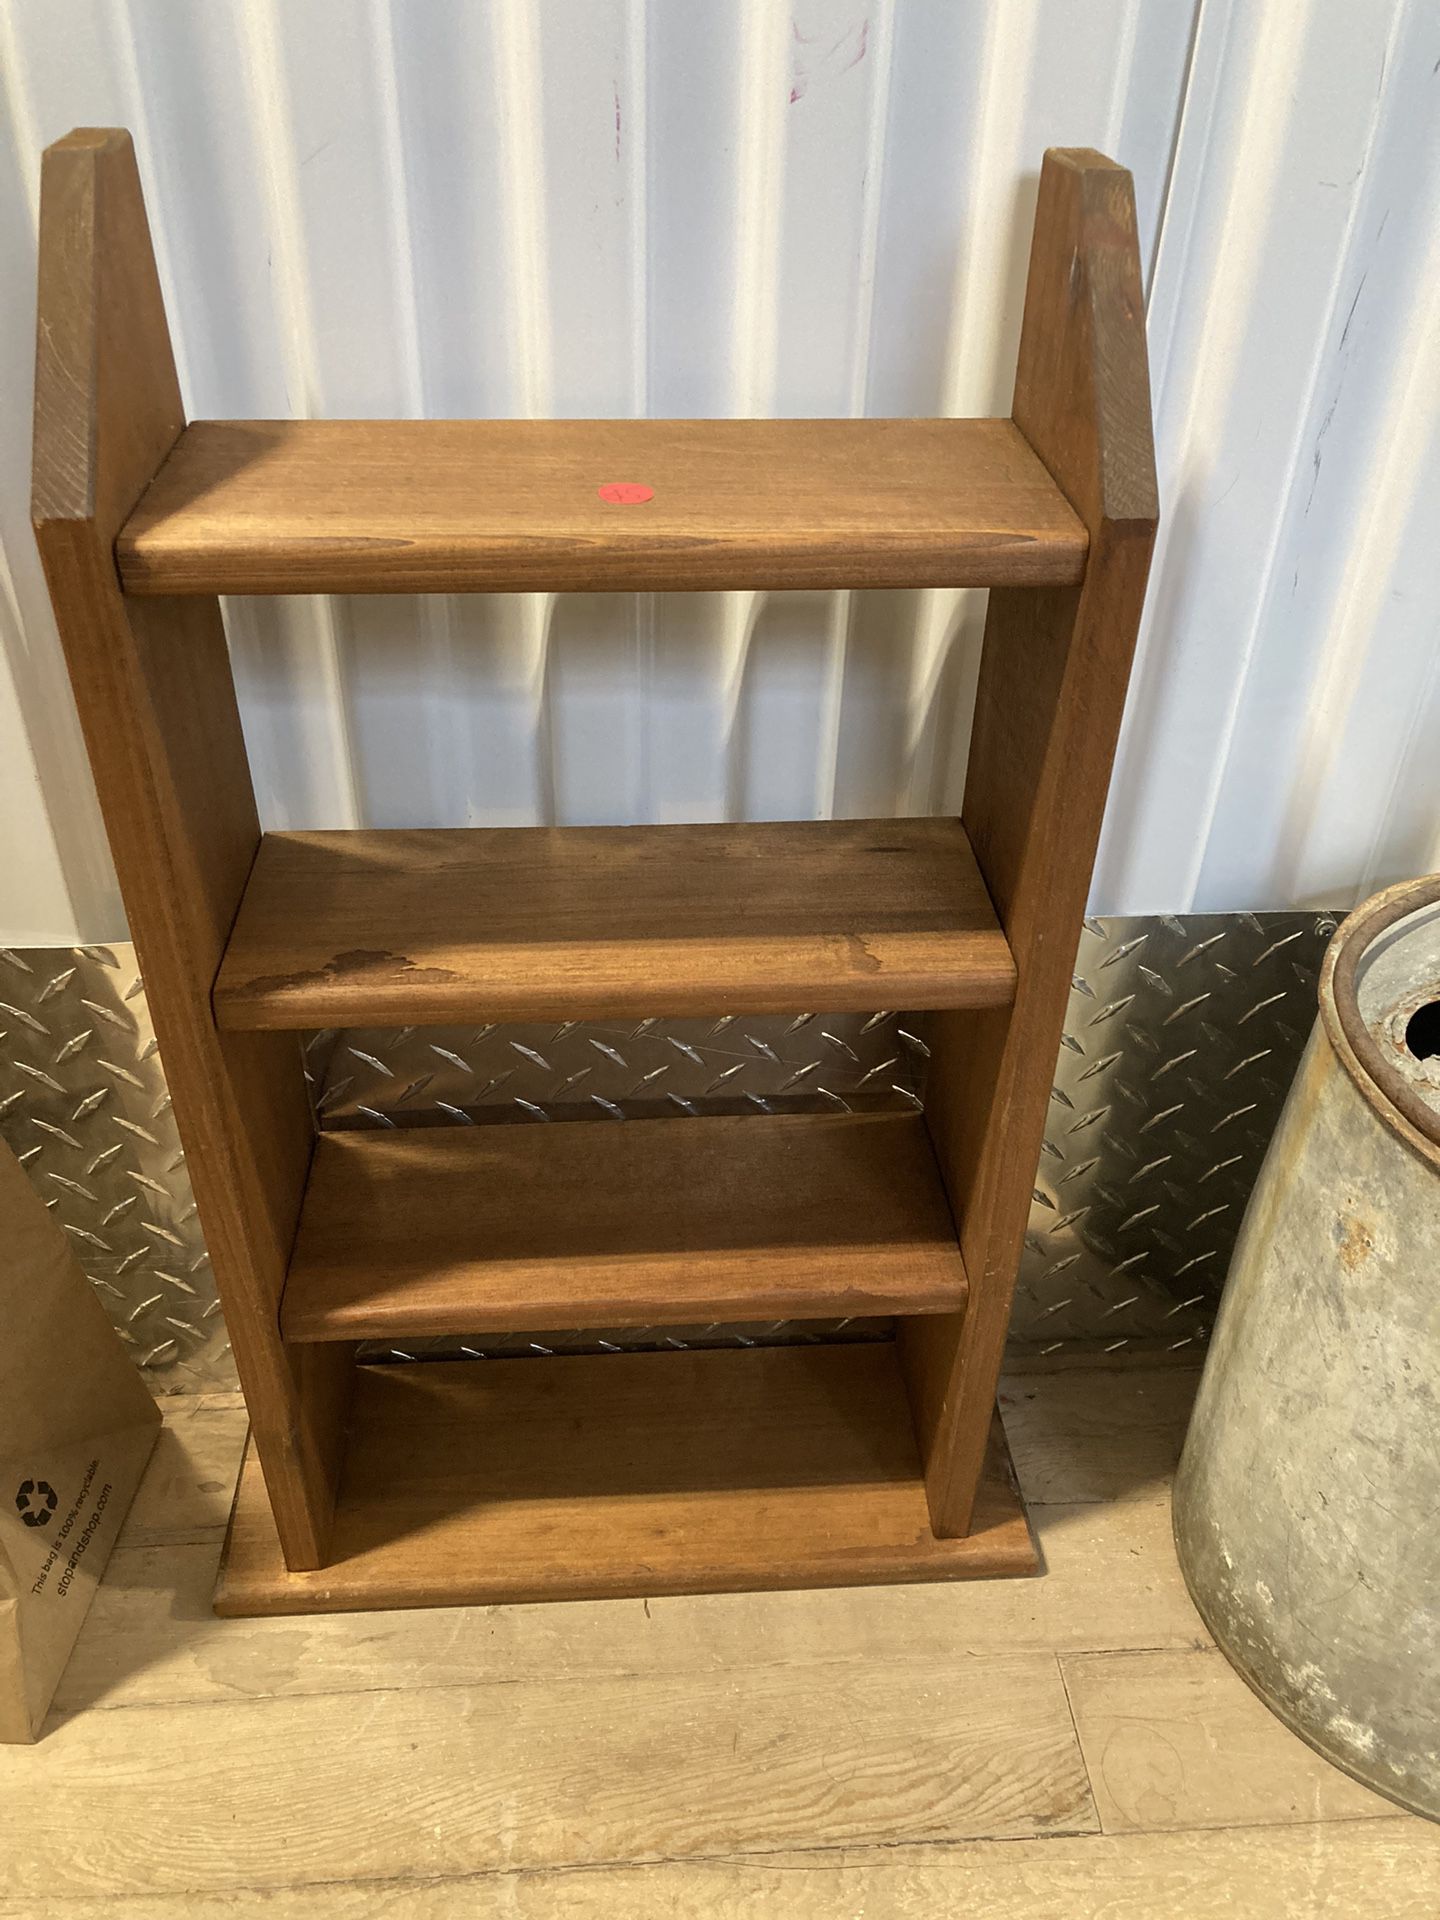 Small Ladder Shelf